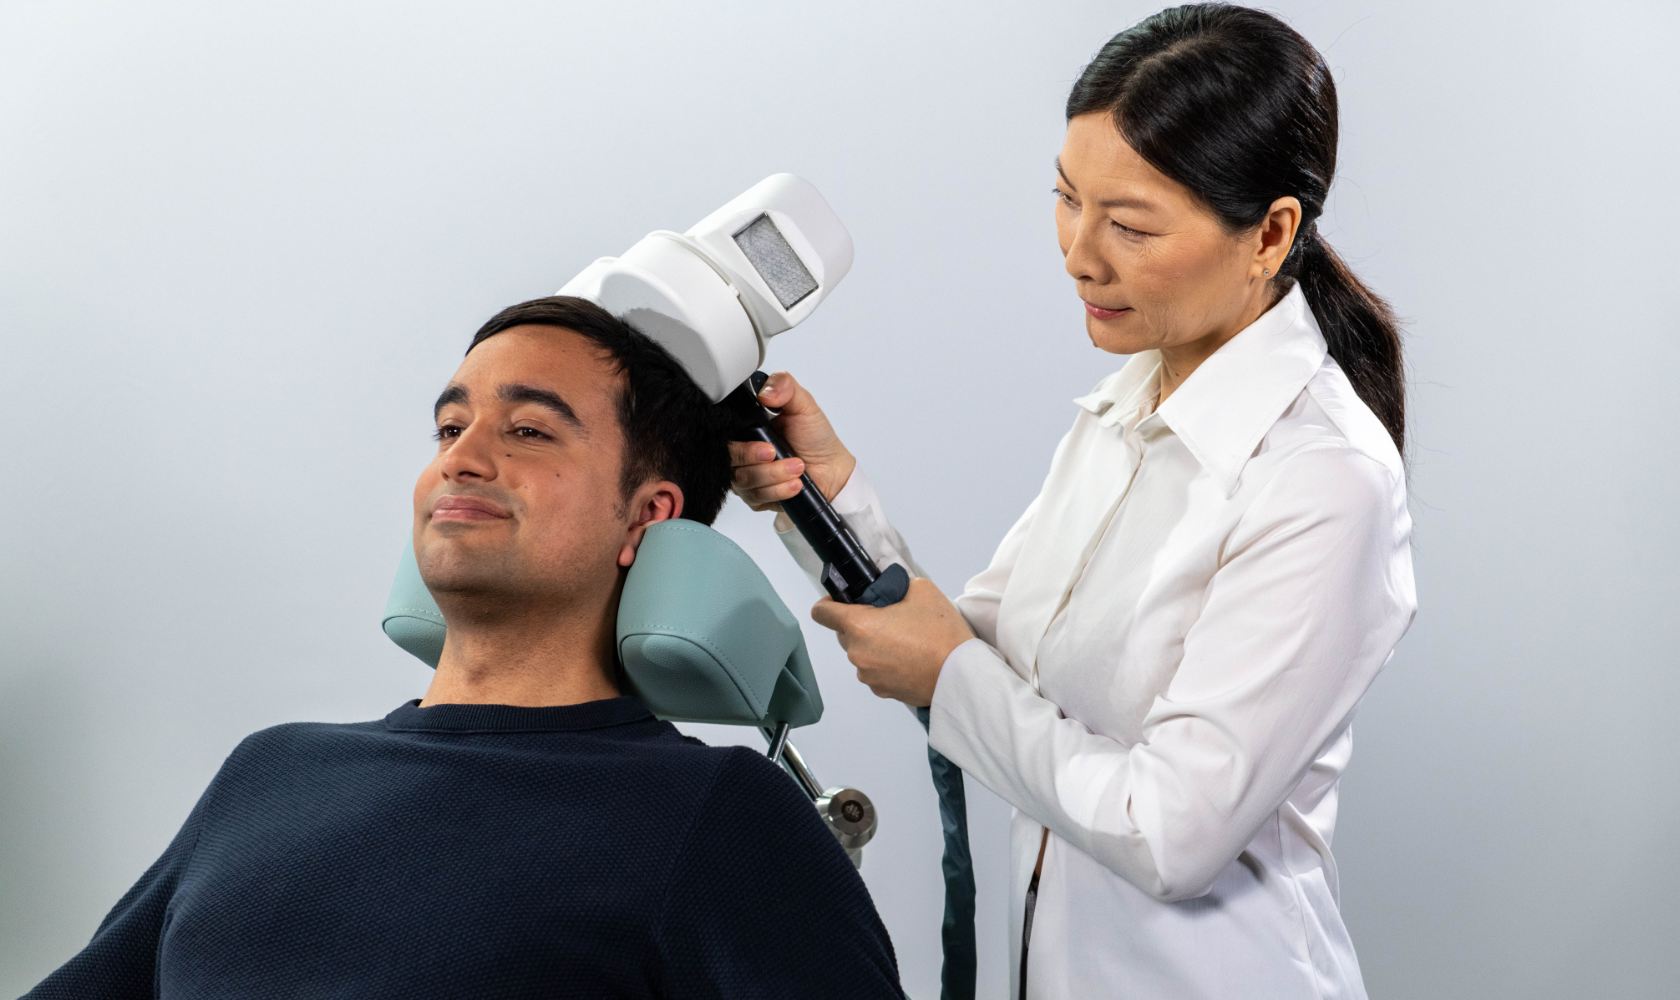 neurocare-clinician-places-tms-coil-on-patients-head